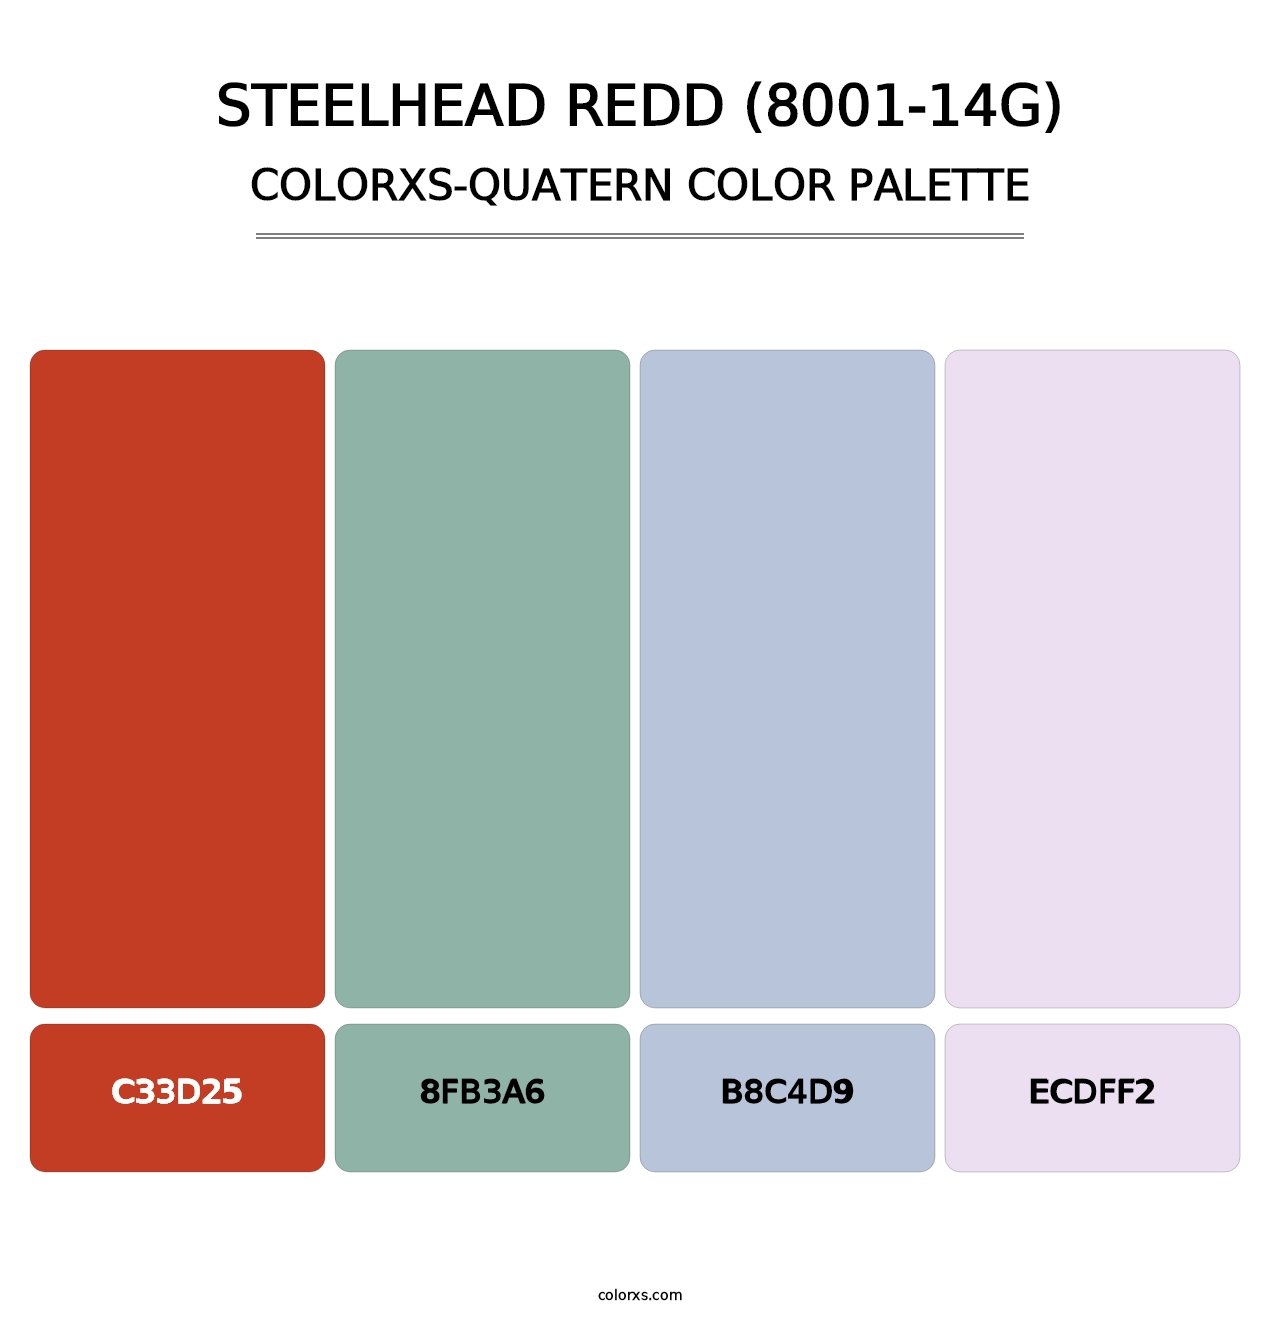 Steelhead Redd (8001-14G) - Colorxs Quatern Palette